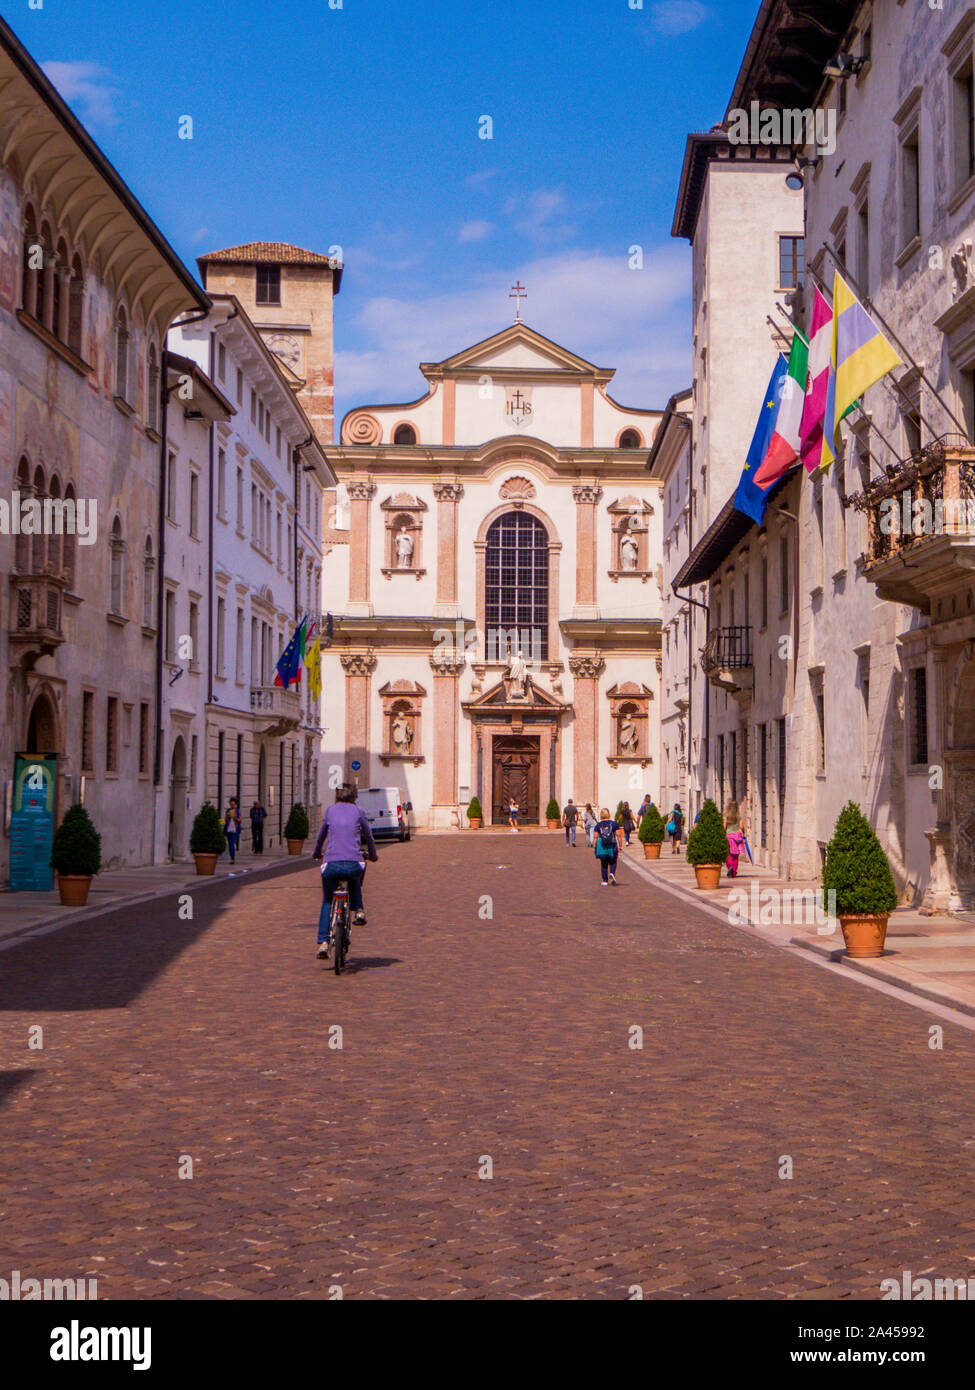 Church of San Francesco Saverio, Trento, Italy Stock Photo